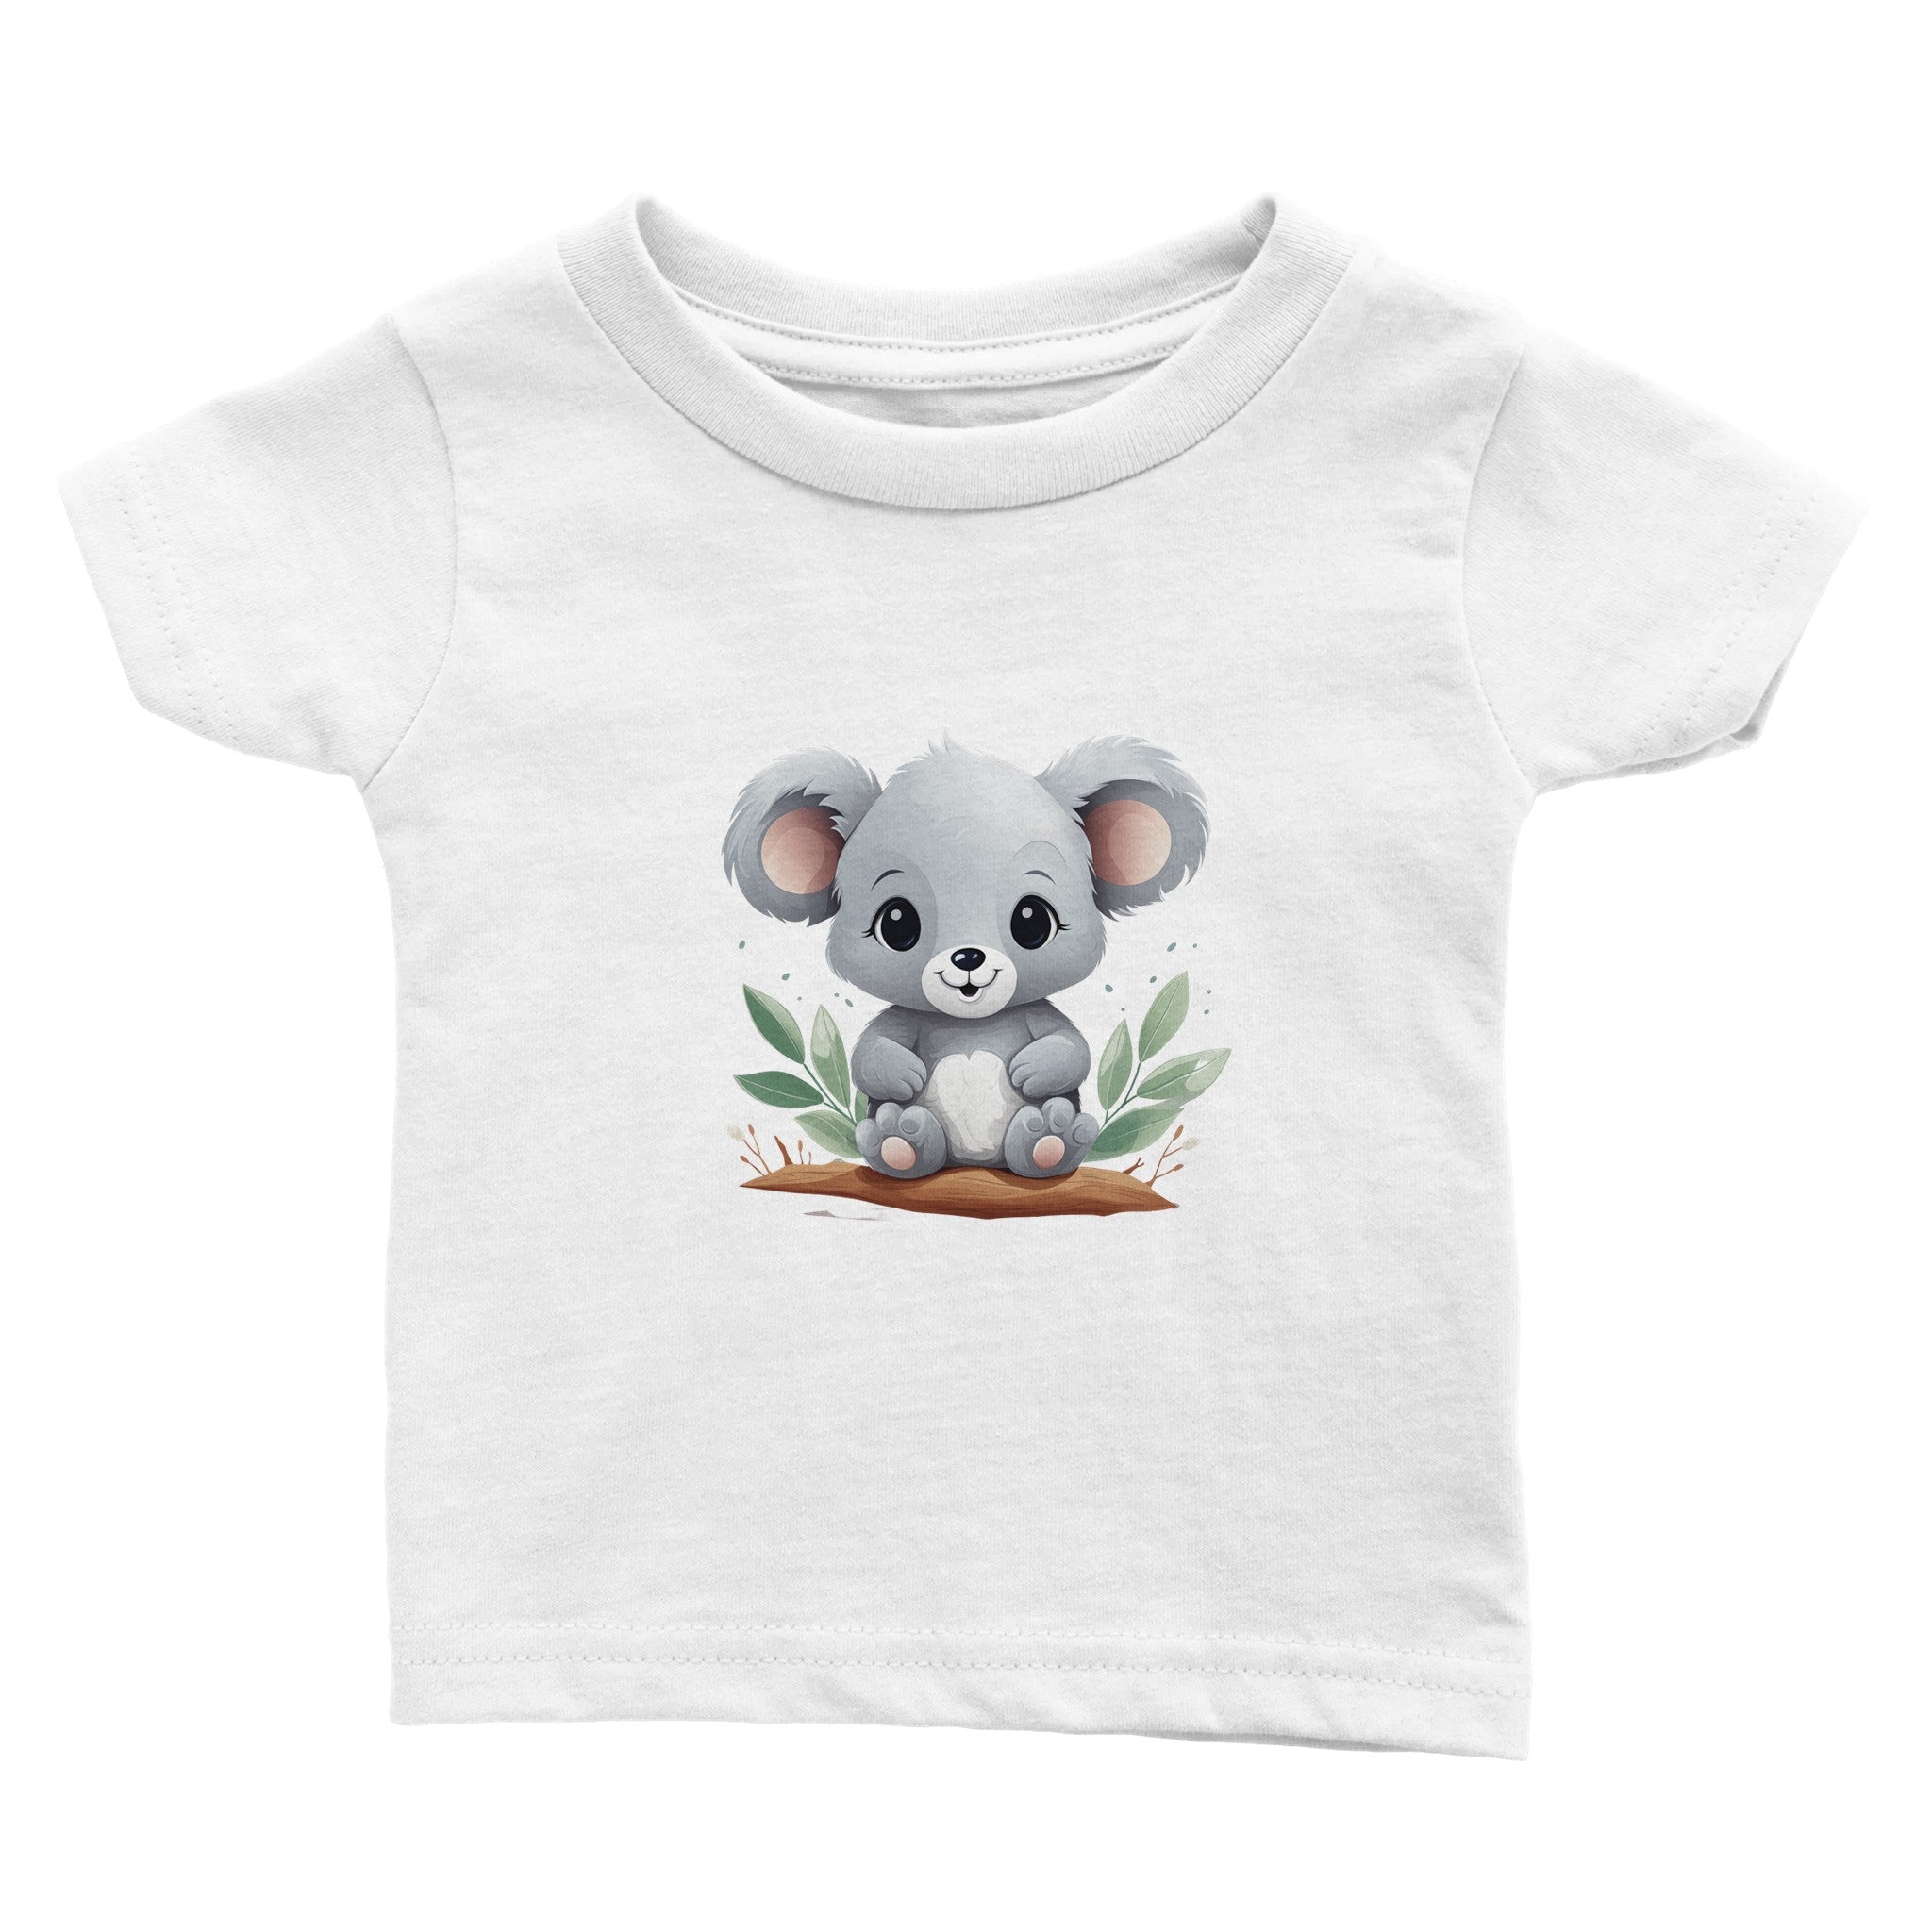 Cuddly Koala Buddy Baby Crewneck T-shirt - Optimalprint